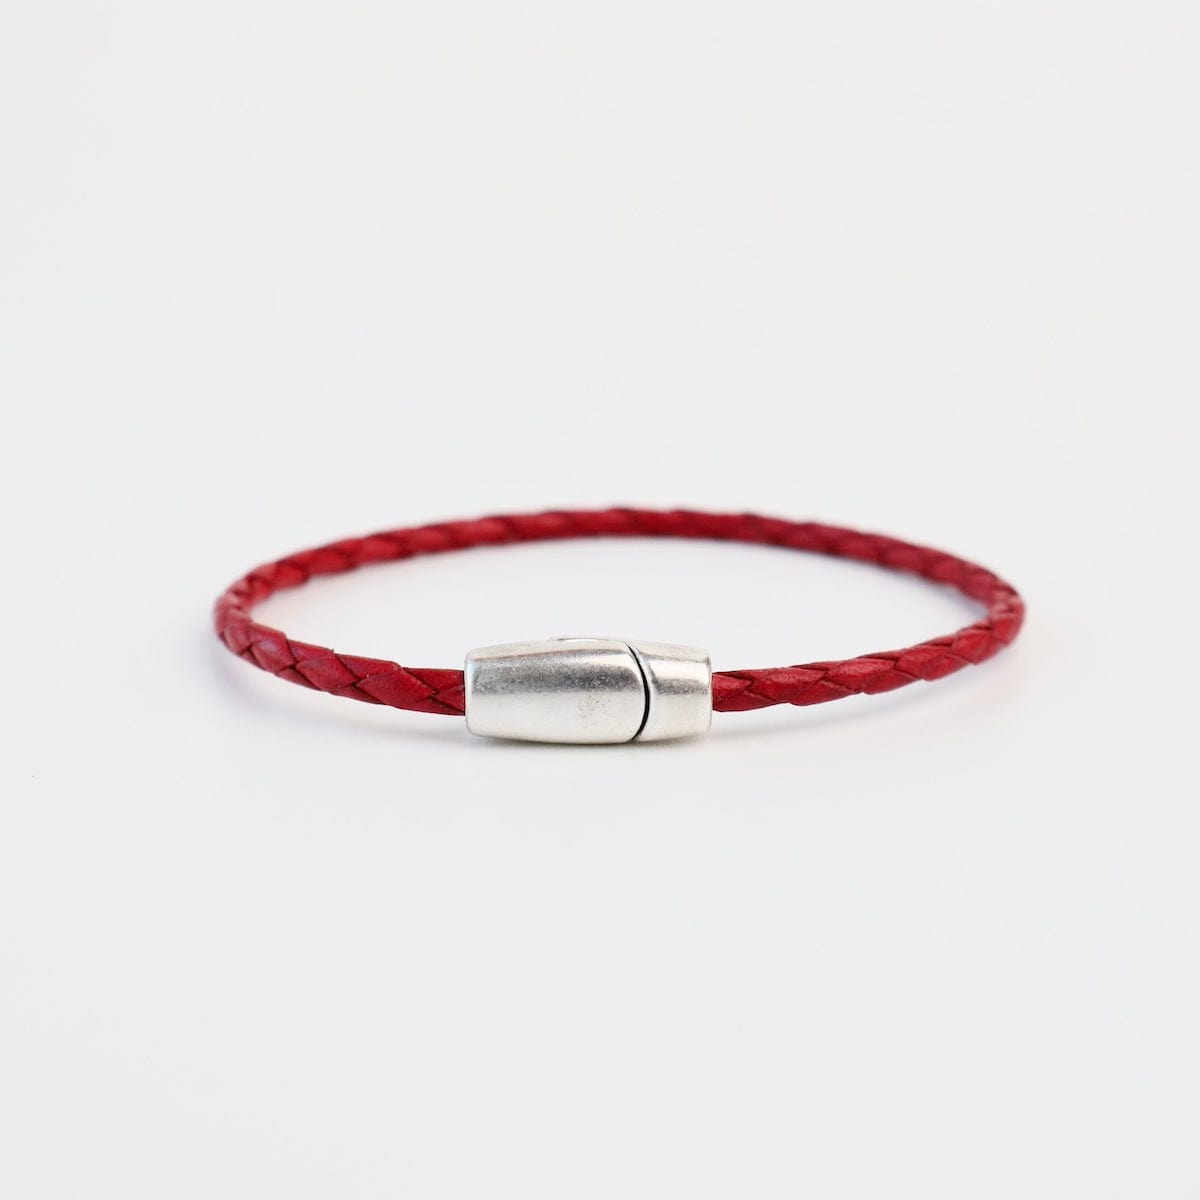 BRC Zoe Braided Red Leather Bracelet - approx 7.5"